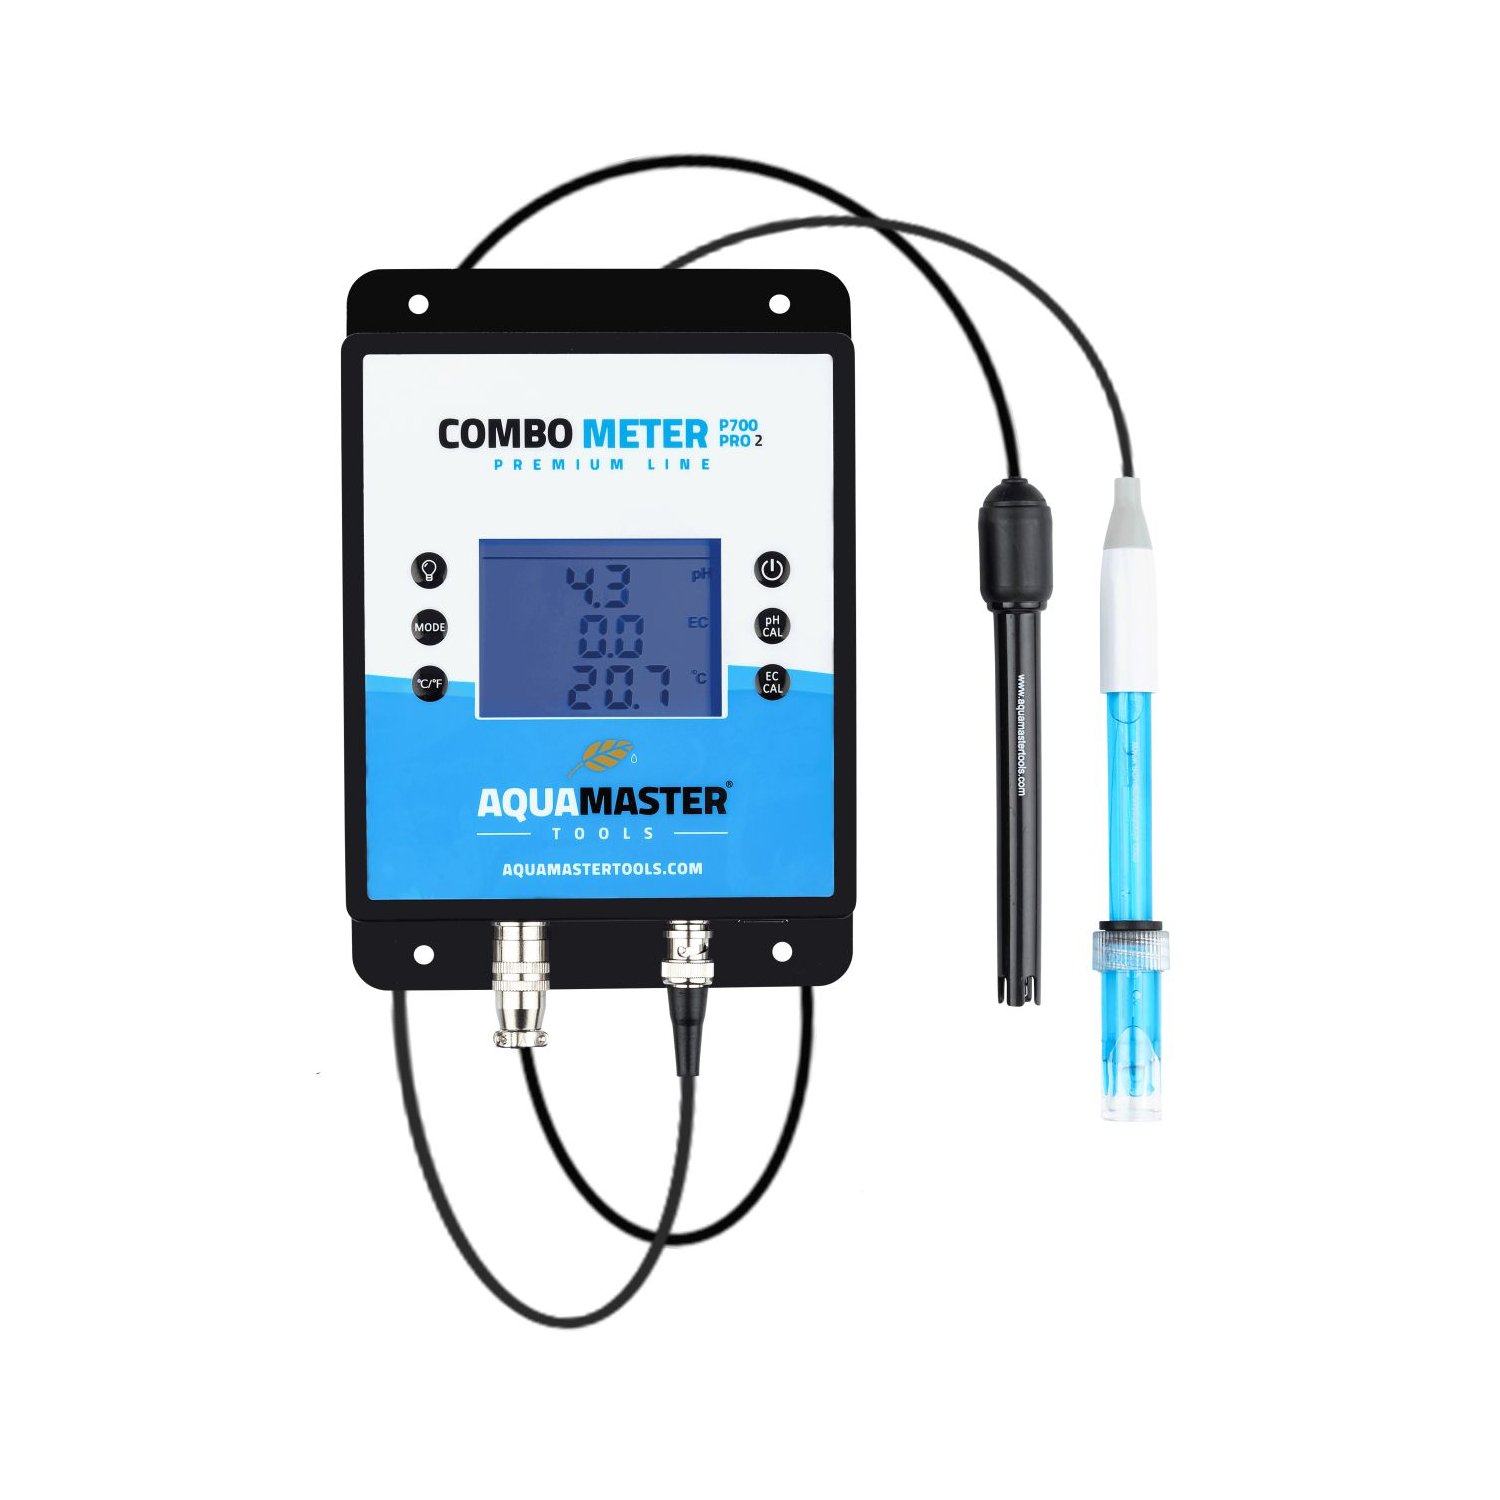 AquaMaster Combo Meter P700 Pro2 unter Messen & Steuern > pH & EC > Messgeräte